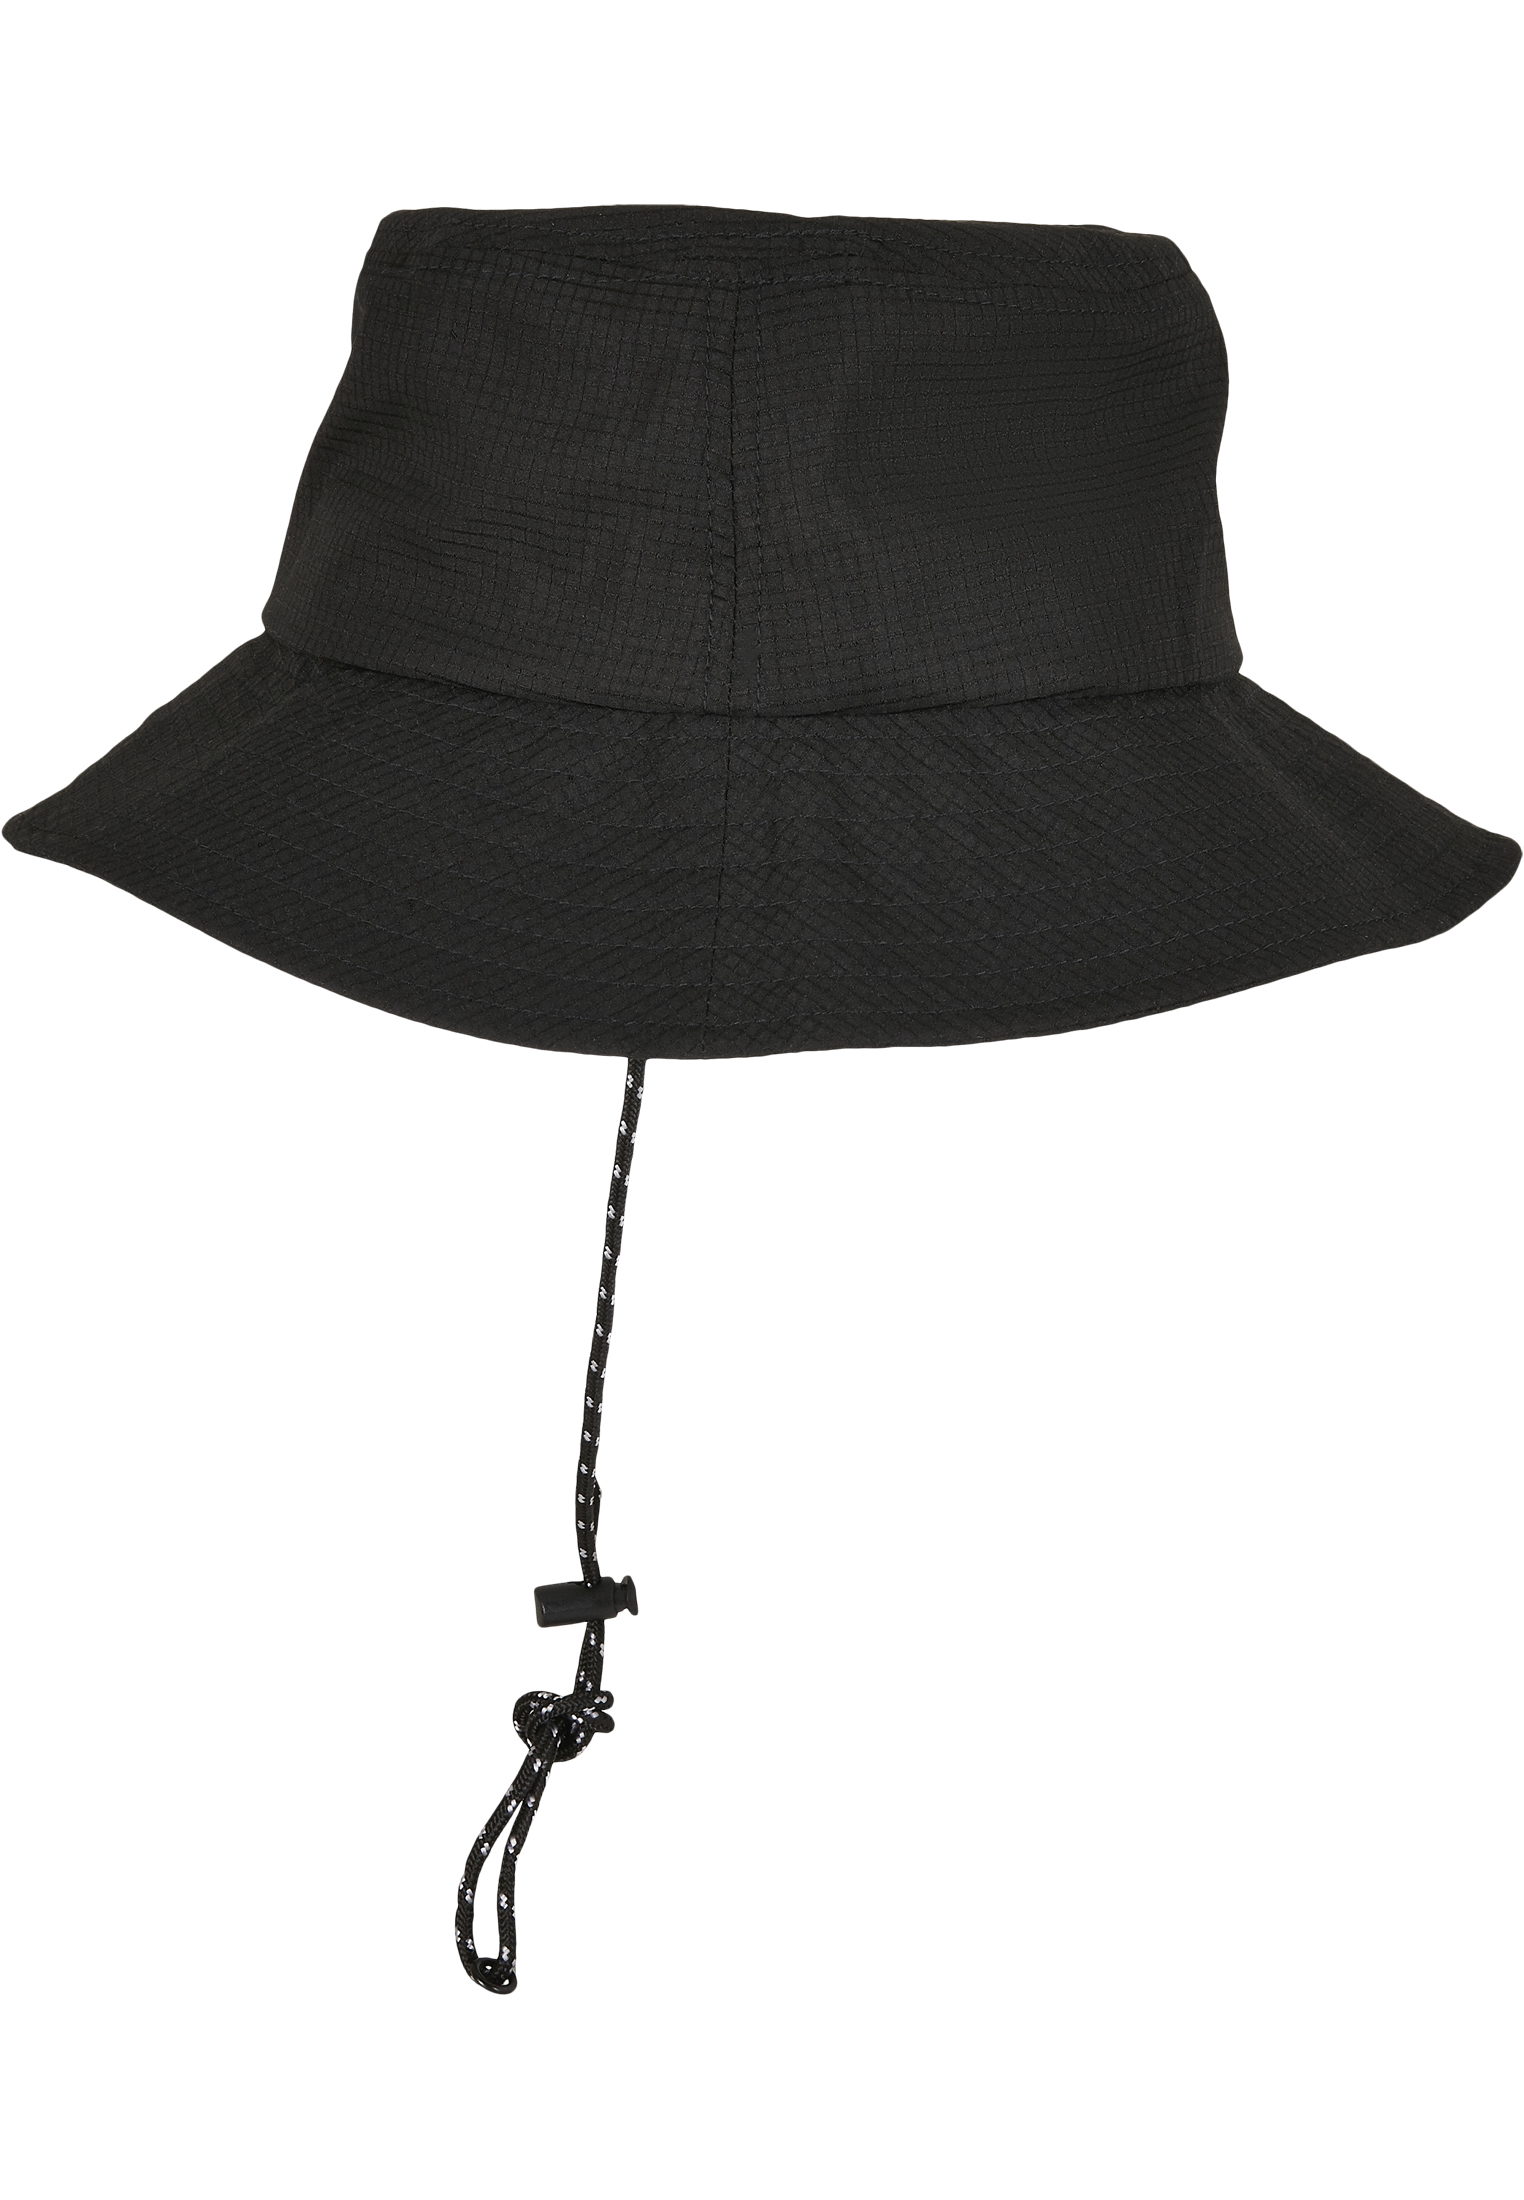 Flexfit Hat-5003AB Bucket Adjustable